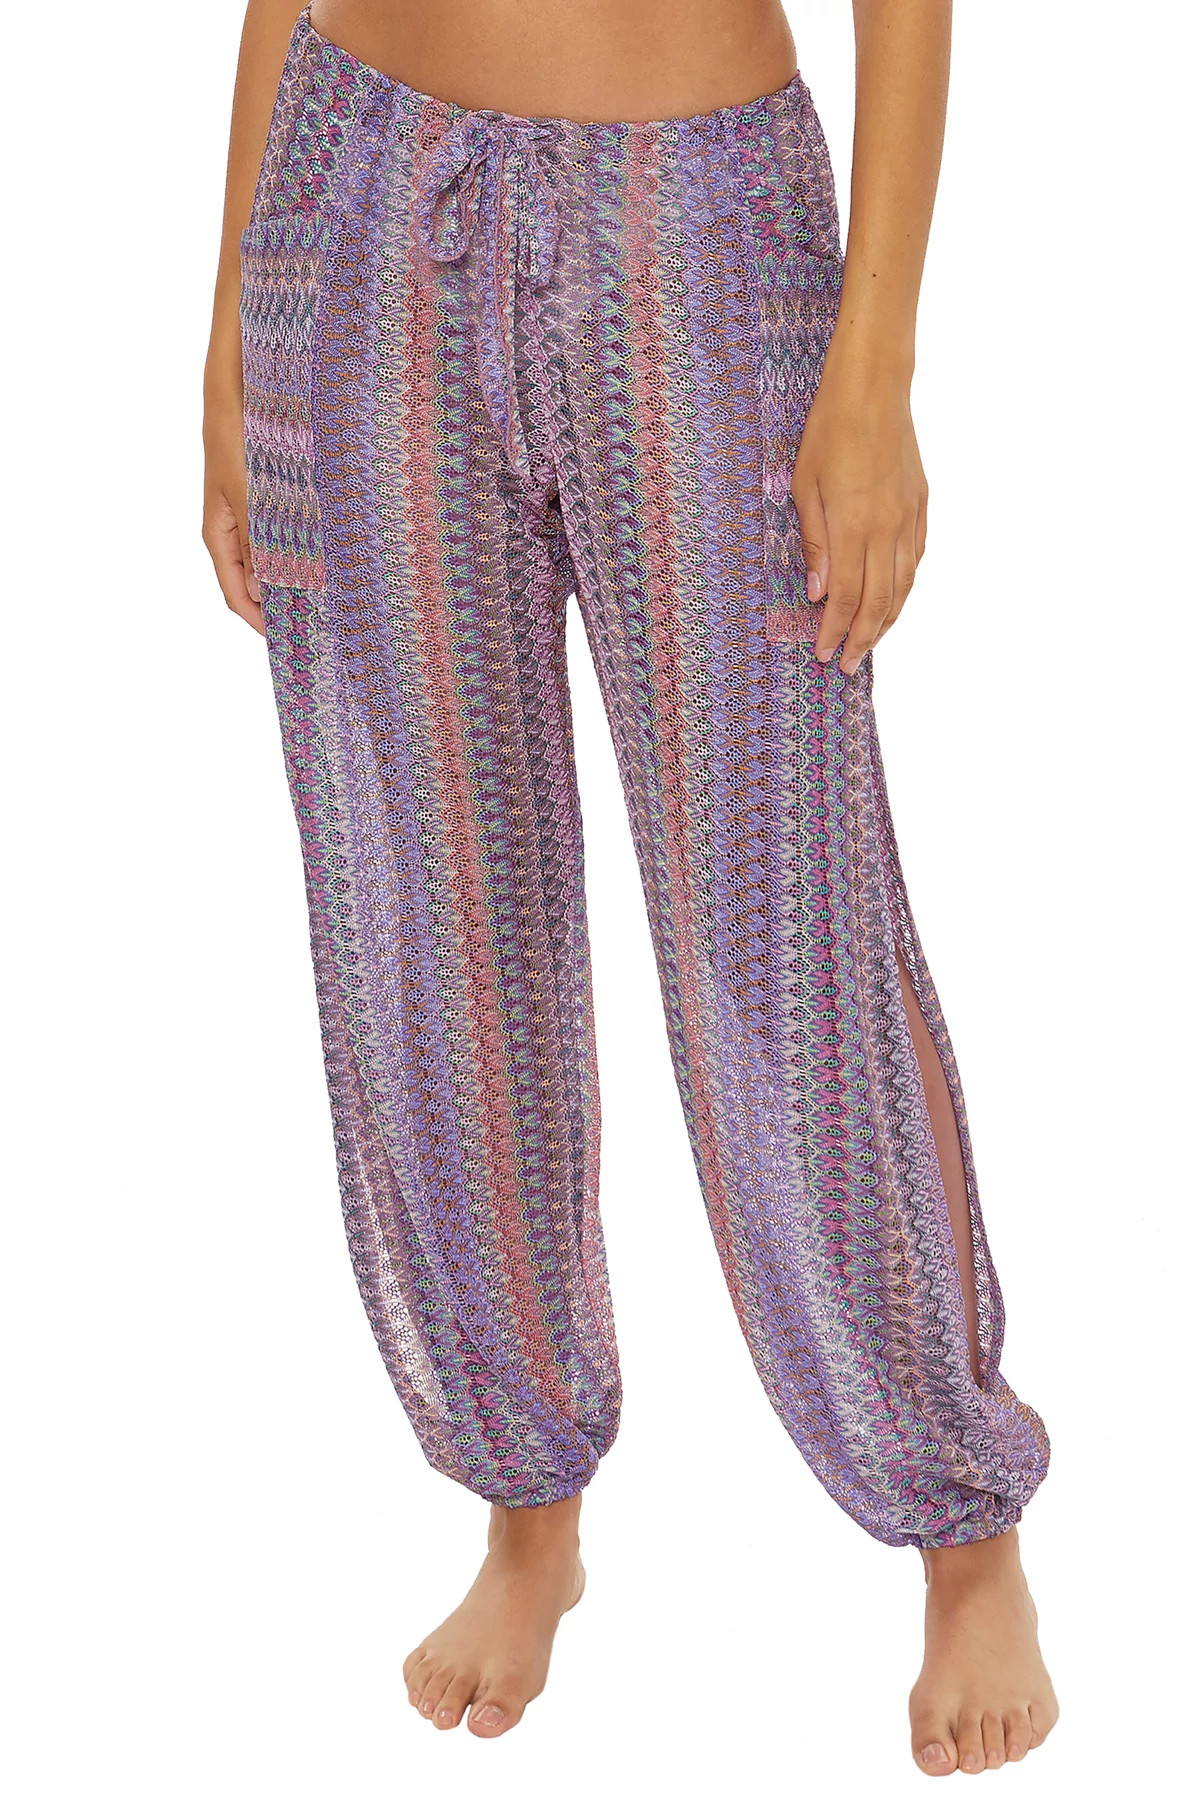 MULTI Horizon Crochet Pants image number 1